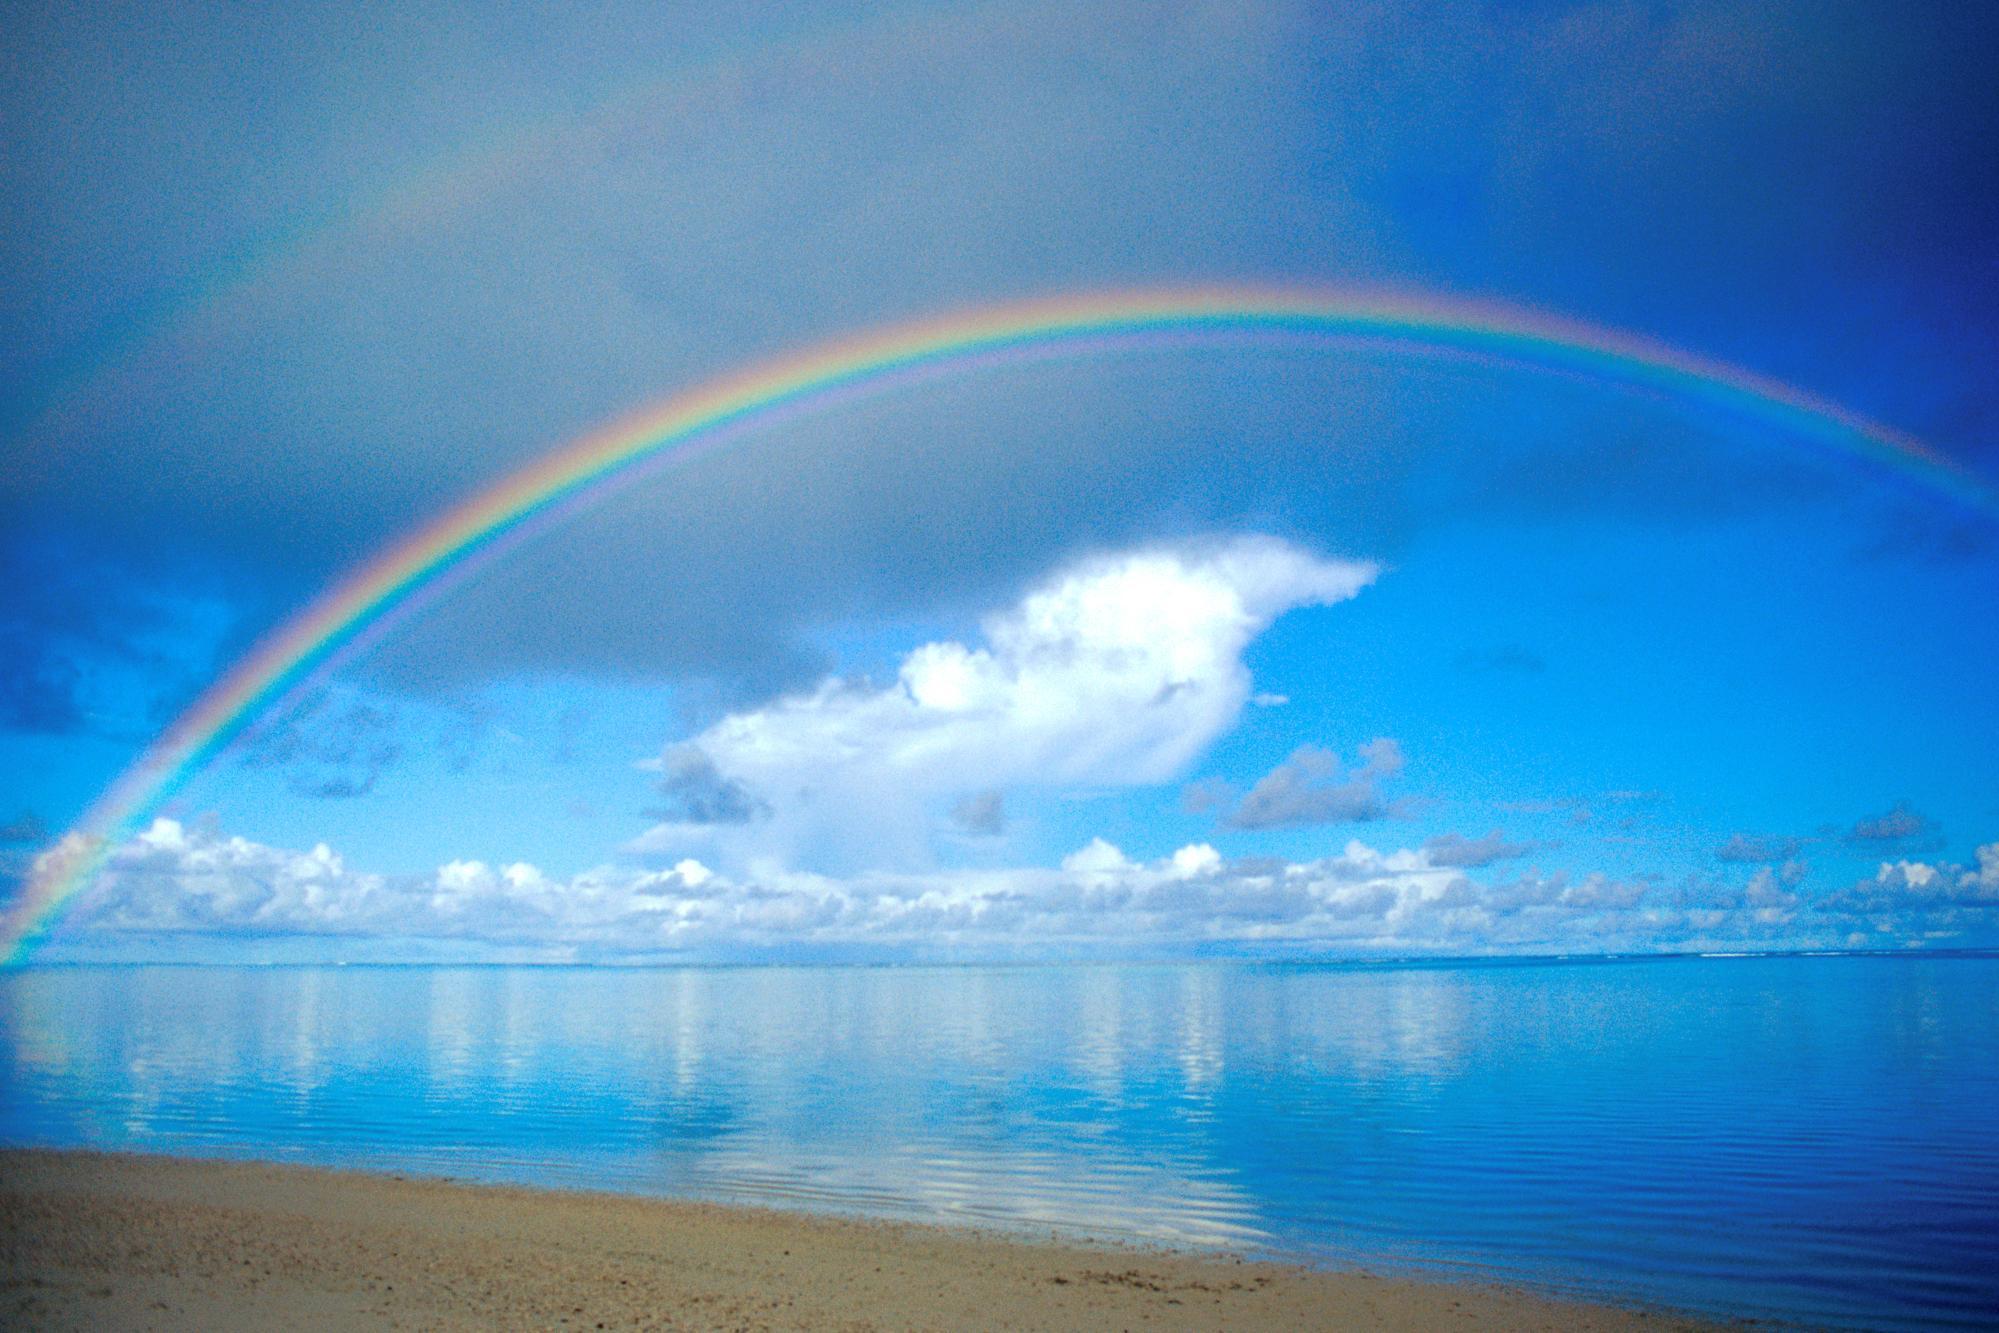 Rainbow colors free desktop background wallpaper image